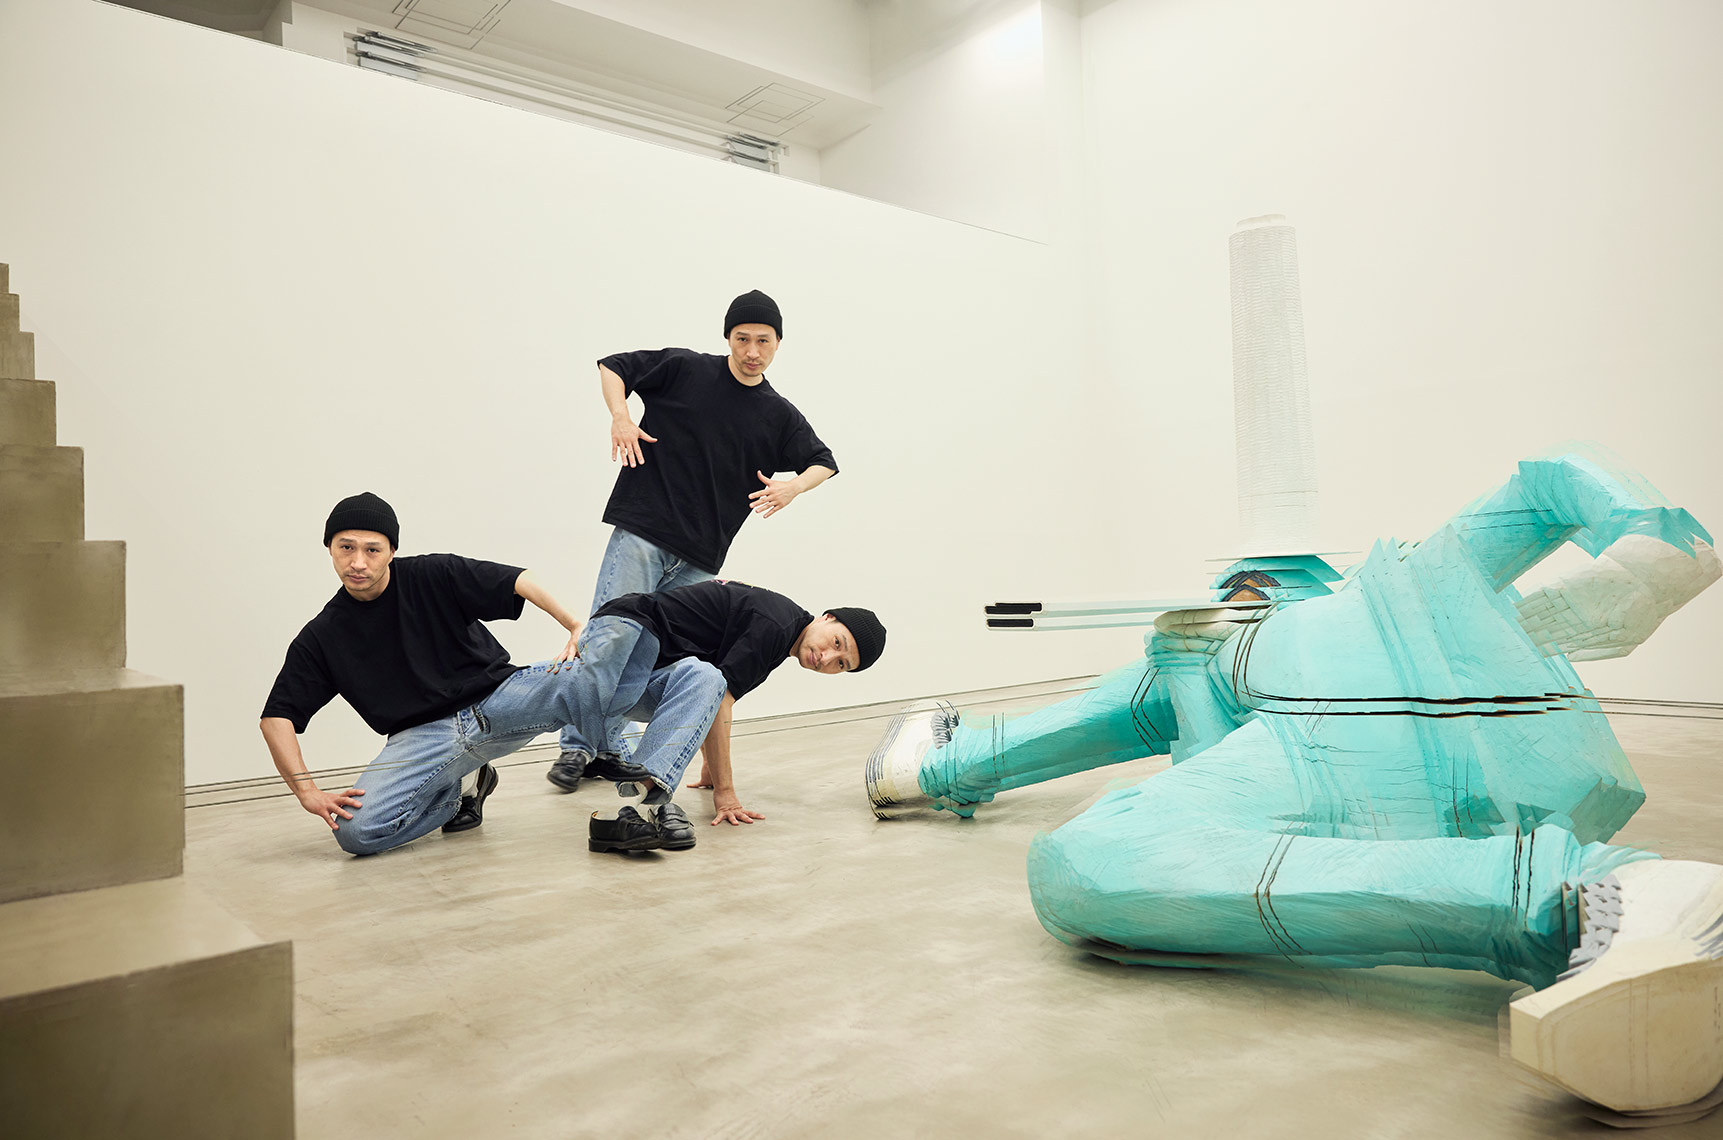 japanese artist Taku Obata is striking b-boy poses with his sculpture. 